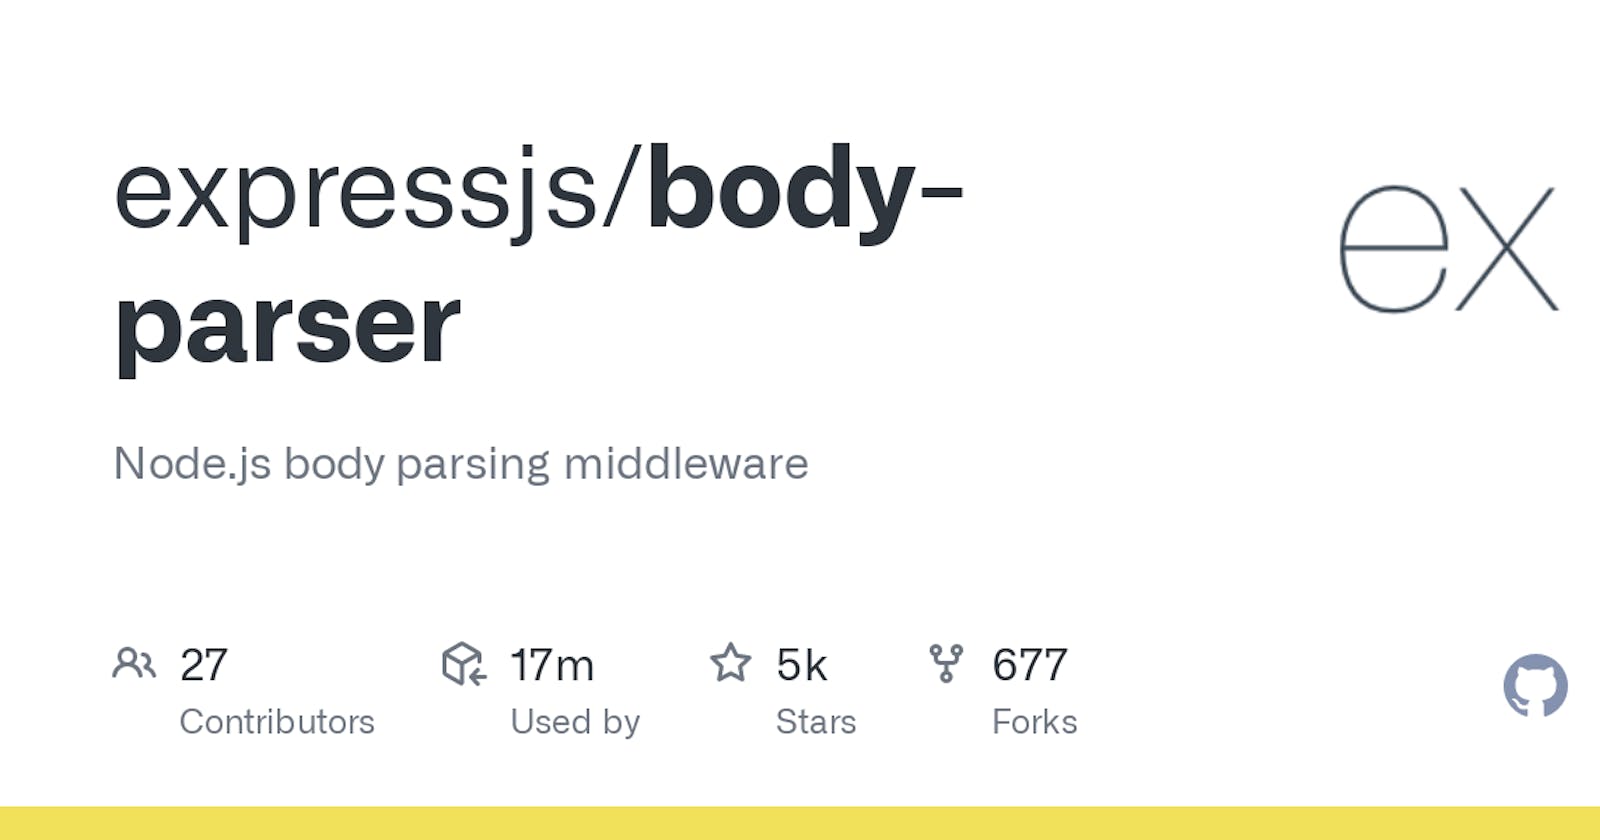 Express body-parser middleware